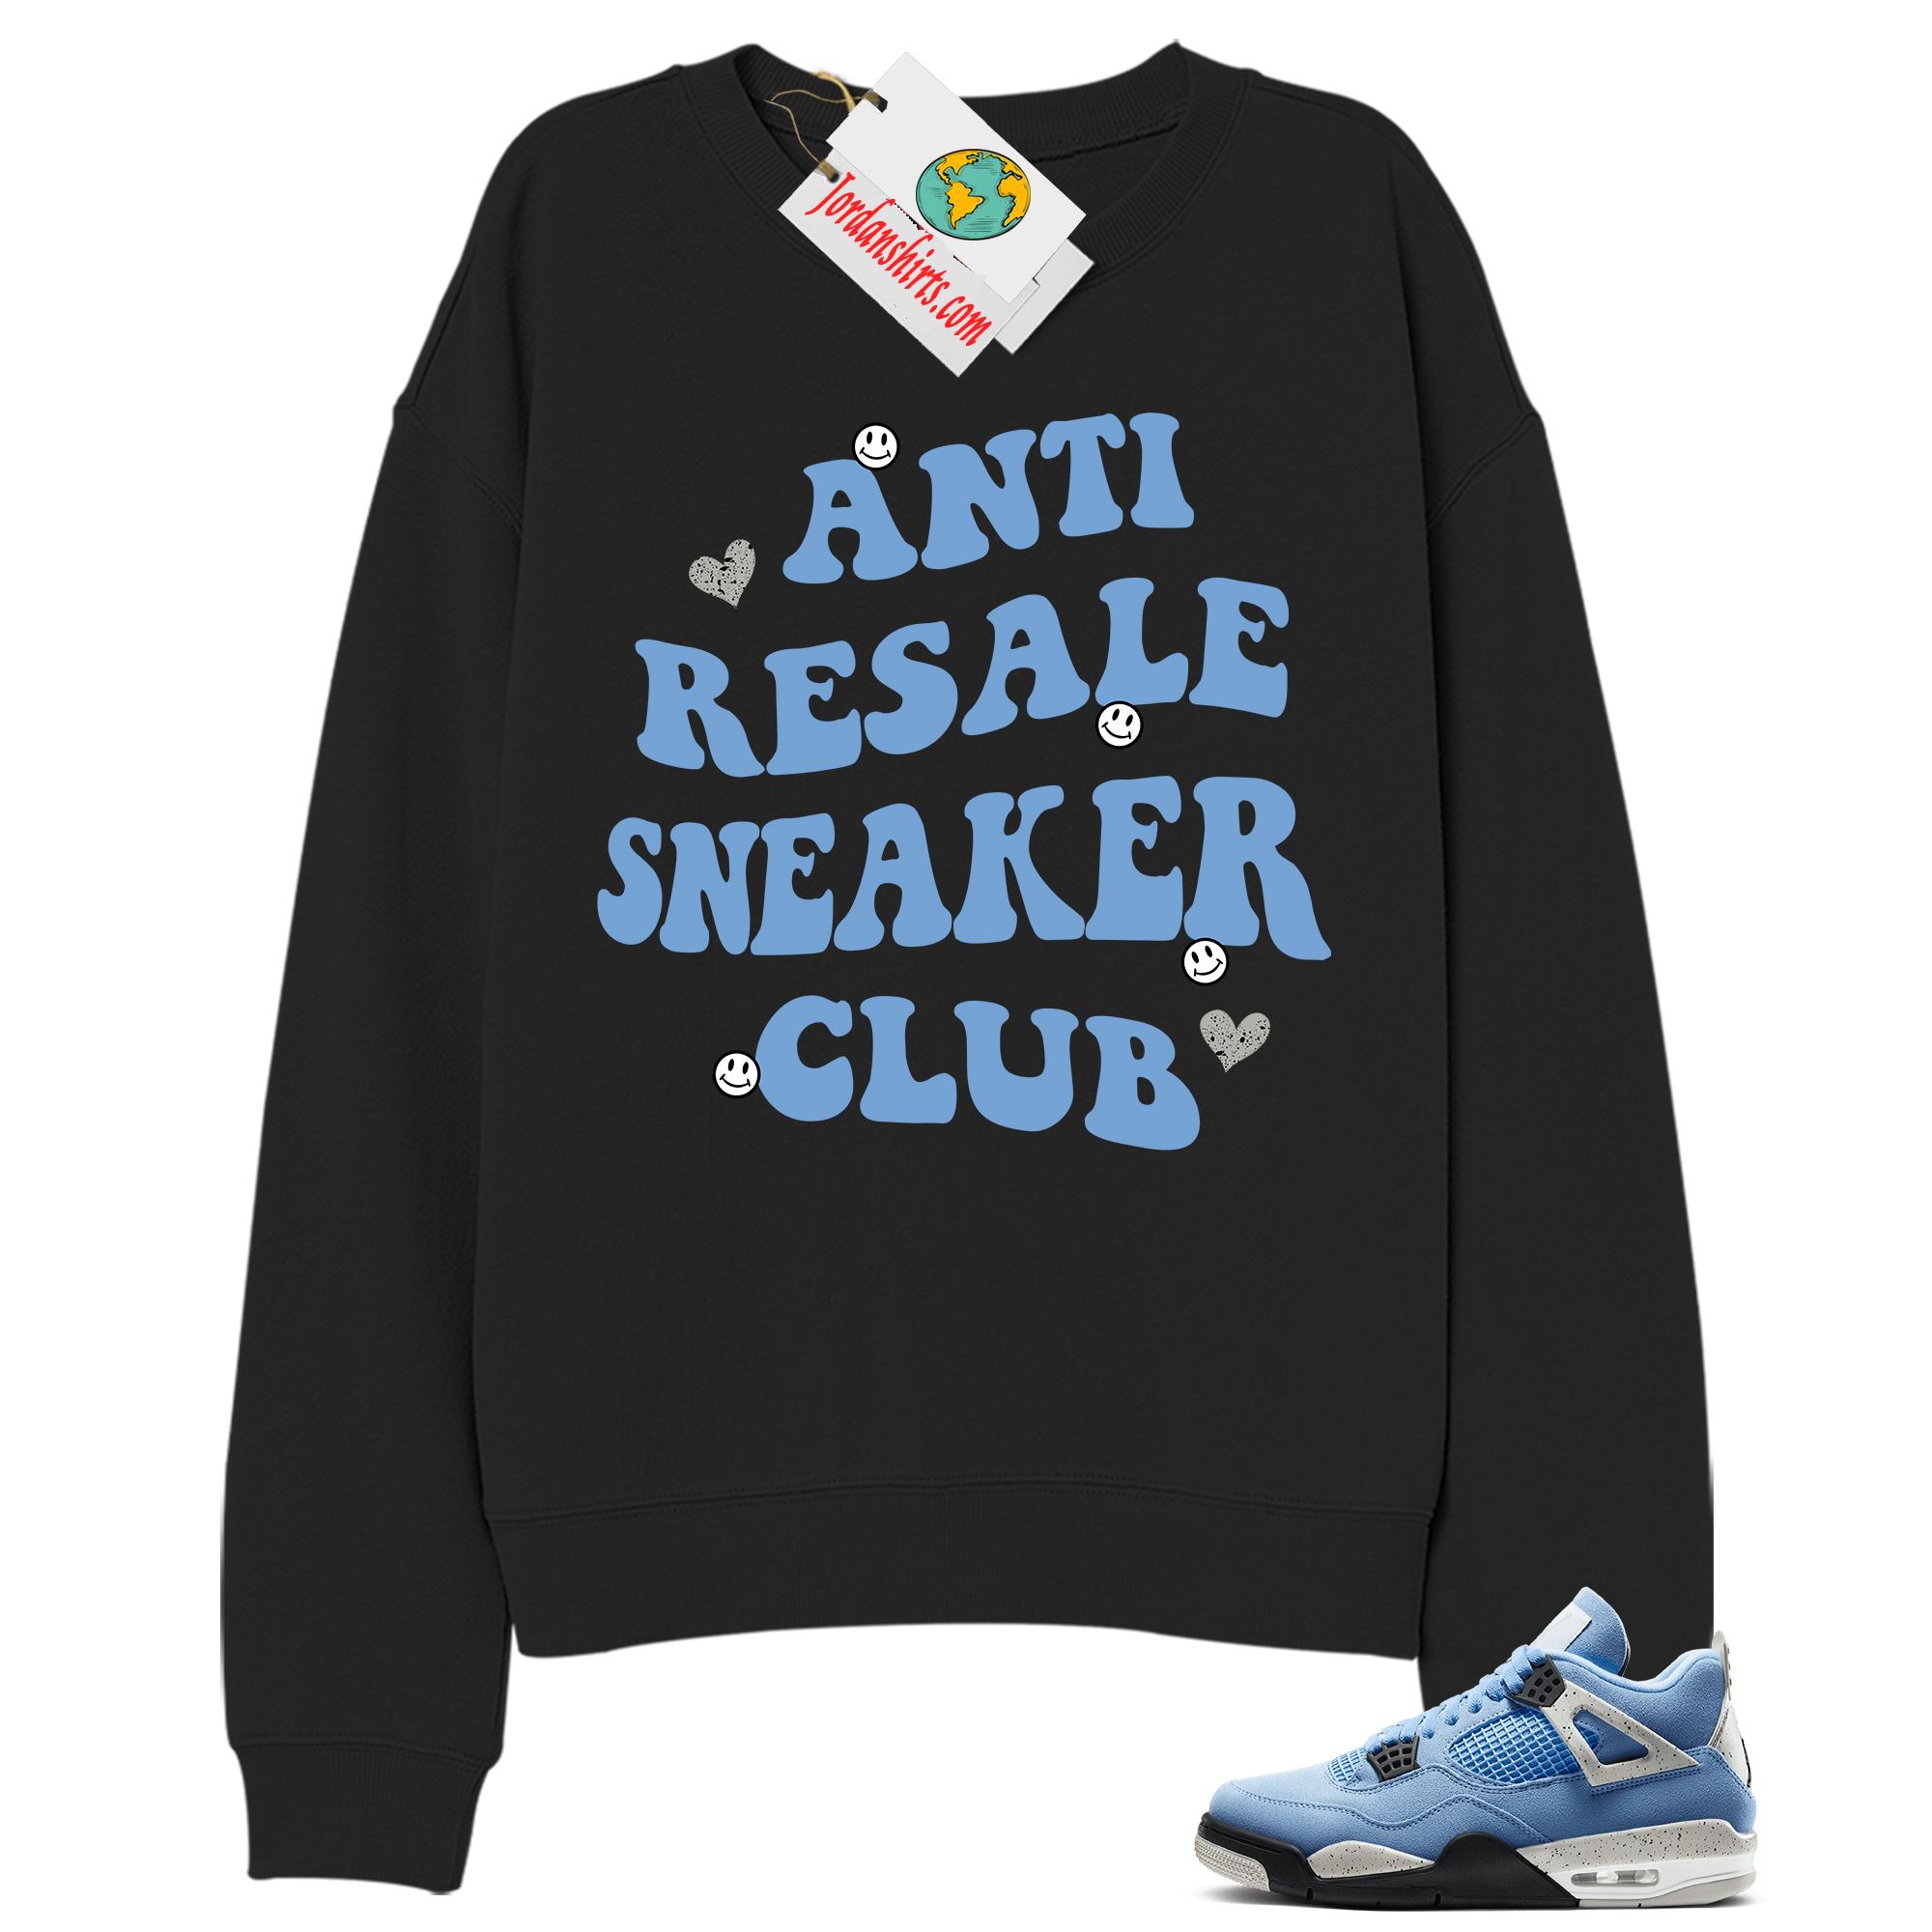 Jordan 4 Sweatshirt, Anti Resale Sneaker Club Black Sweatshirt Air Jordan 4 University Blue 4s Full Size Up To 5xl